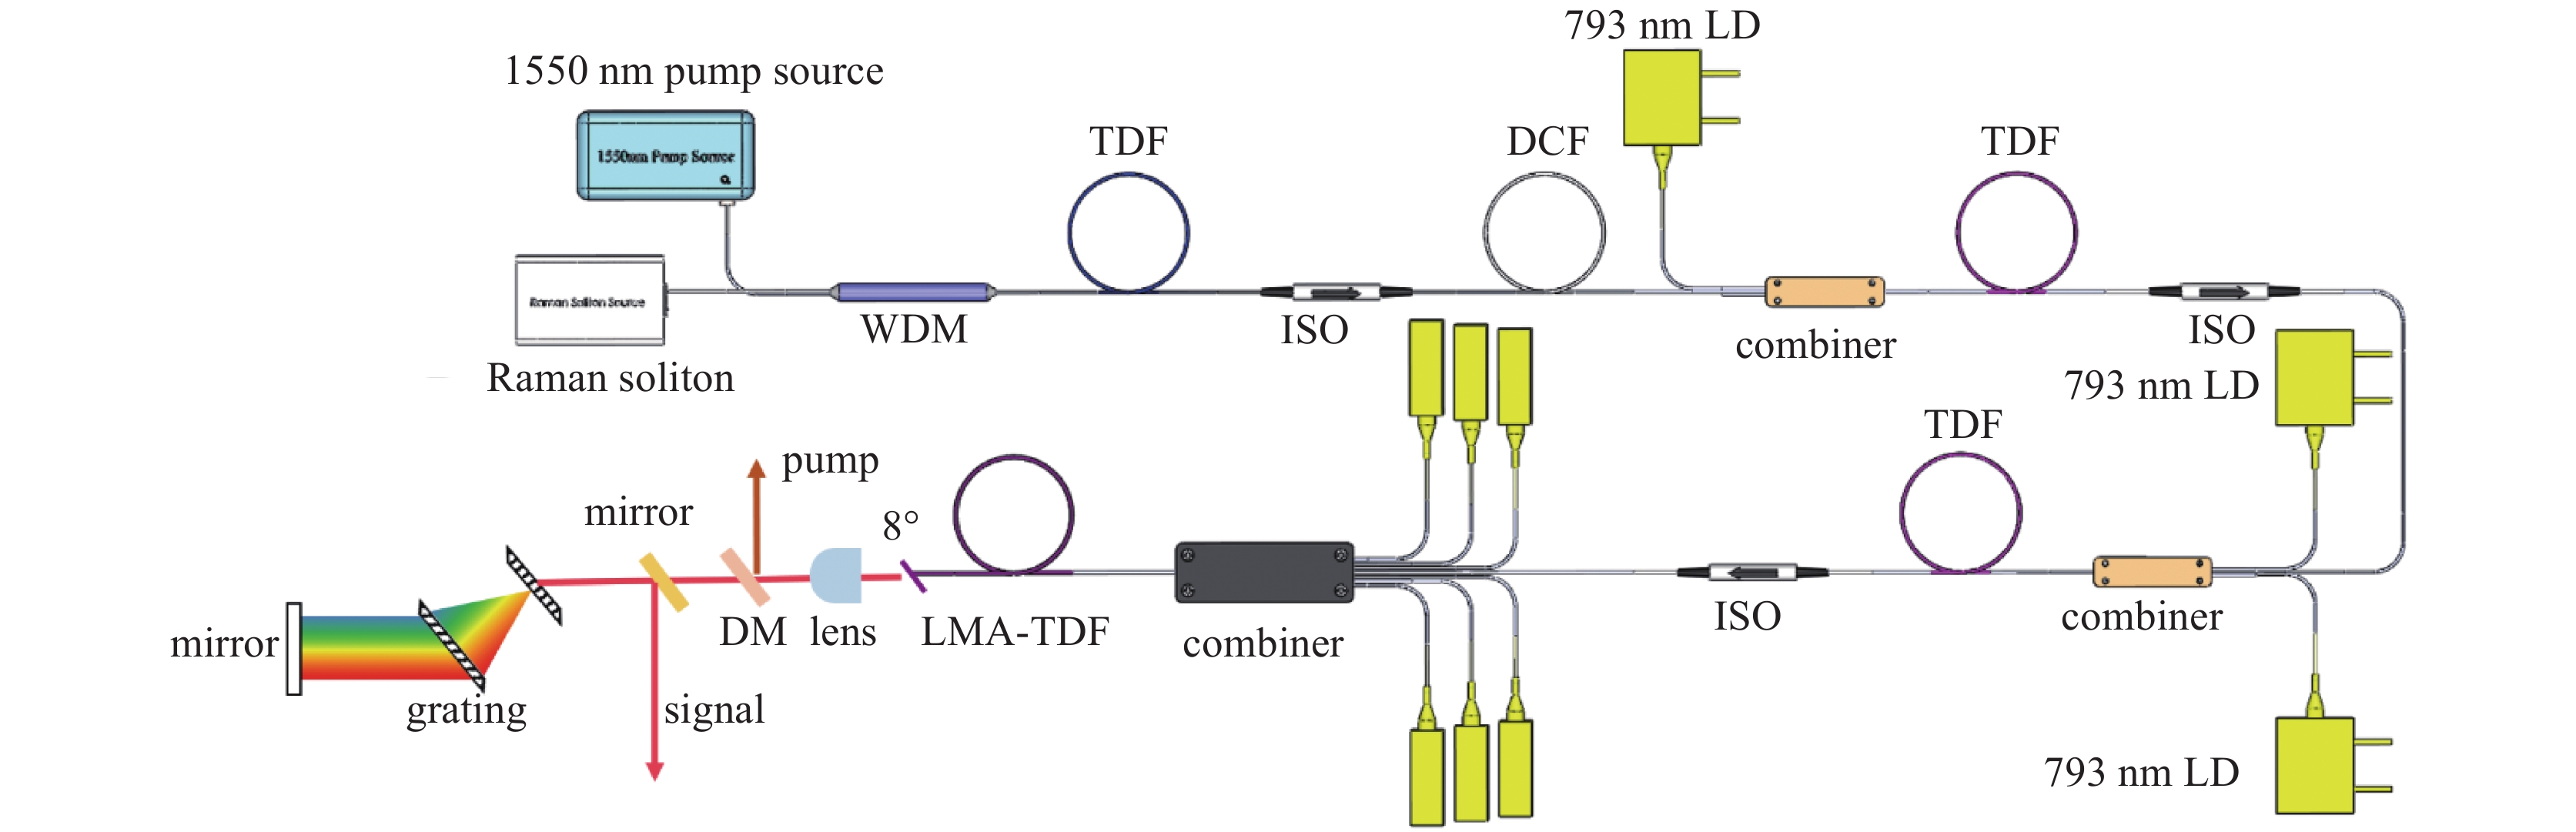 Experimental device diagram of thulium-doped fiber amplifier